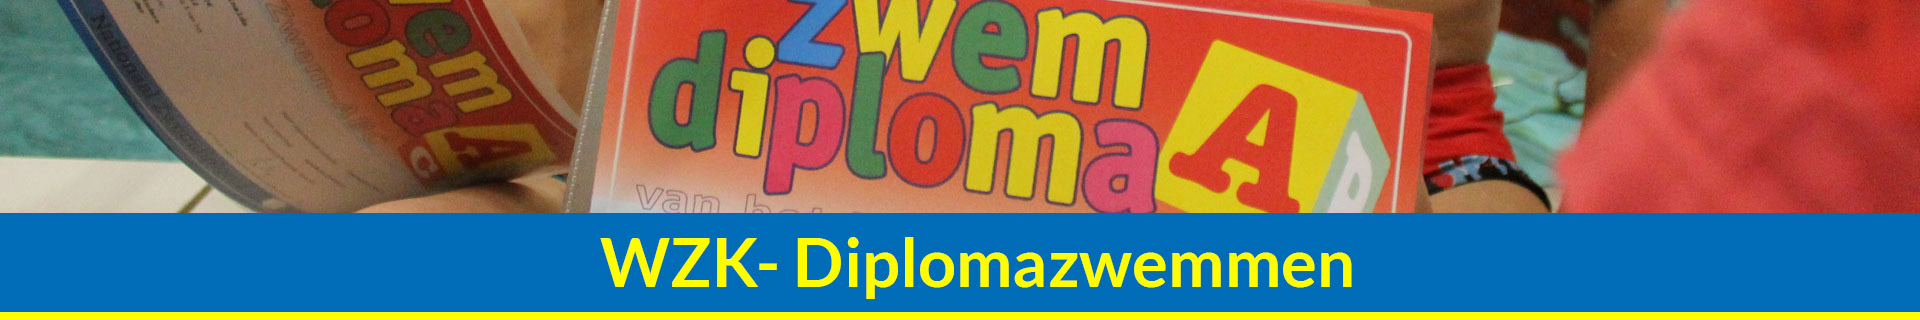 wzk diplomazwemmen banner